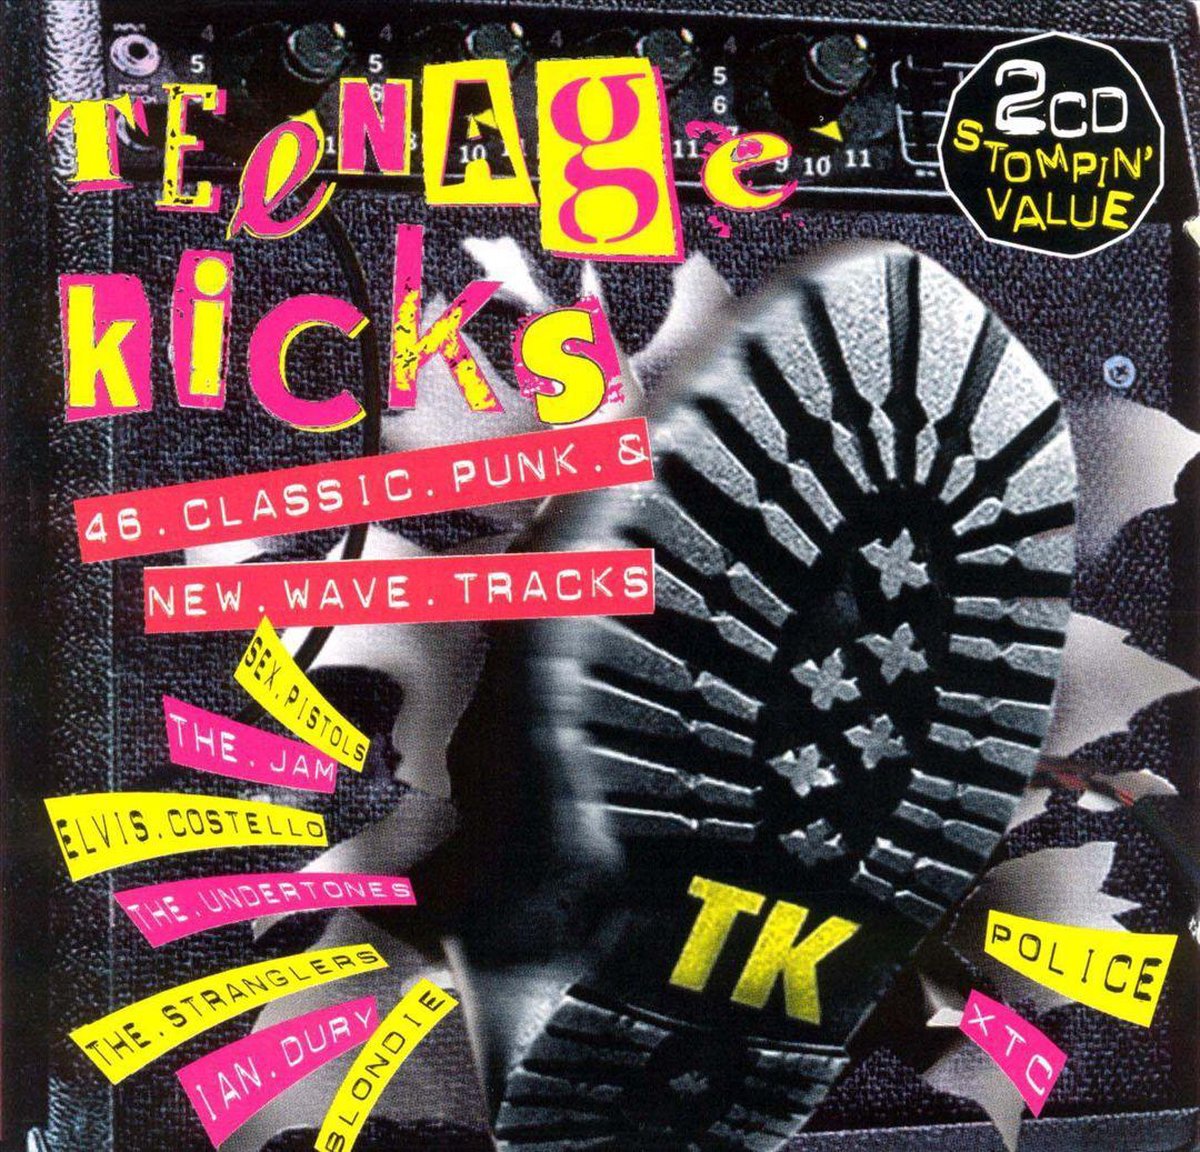 Teenage Kicks: 46 Classic Punk & New Wave Tracks - various artists